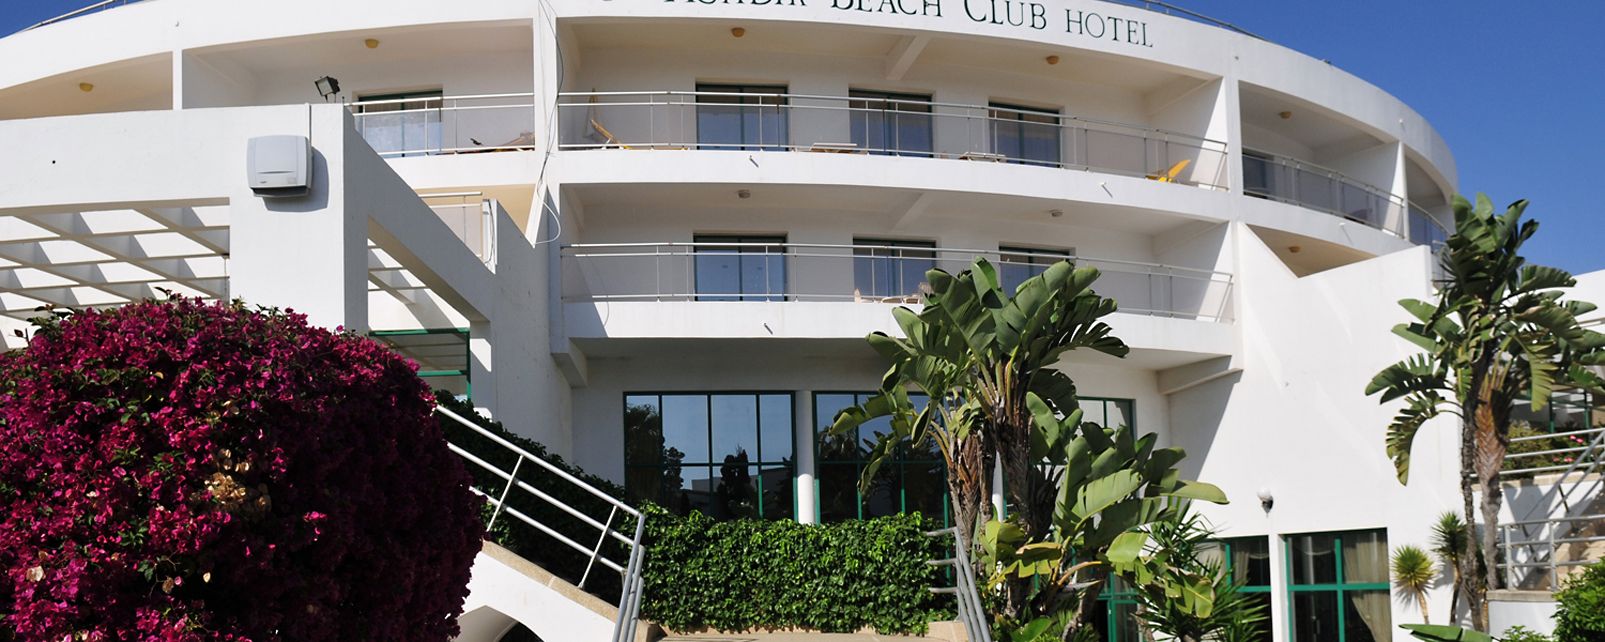 Hôtel Agadir Beach club